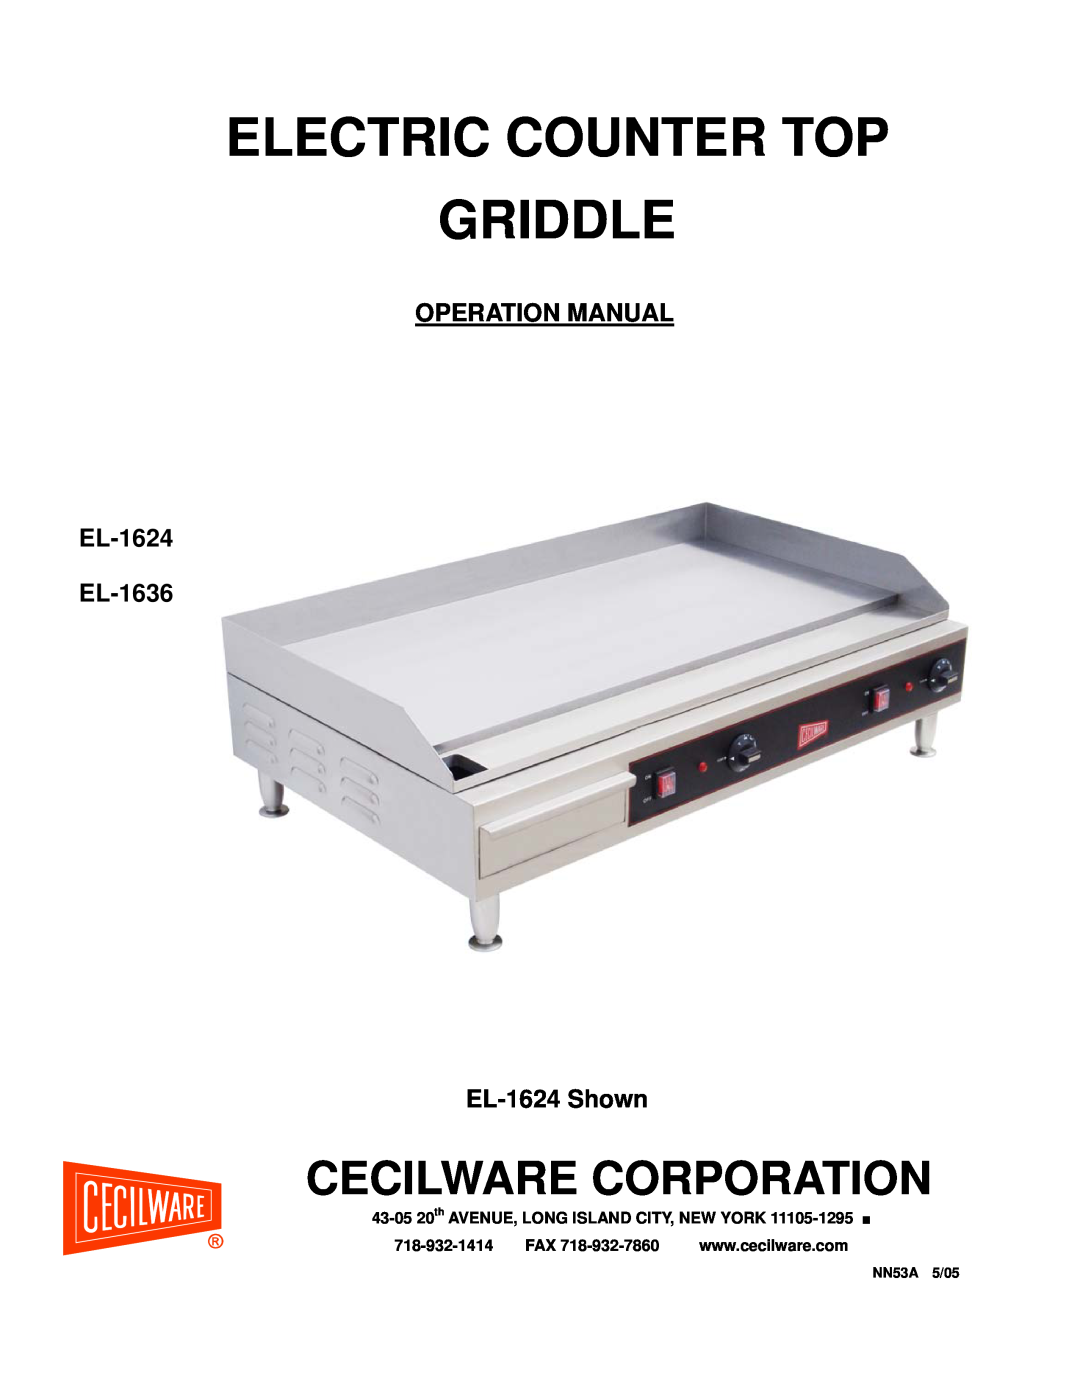 Cecilware EL-1636, EL-1624 operation manual Cecilware Corporation, Electric Counter Top Griddle, NN53A 5/05 